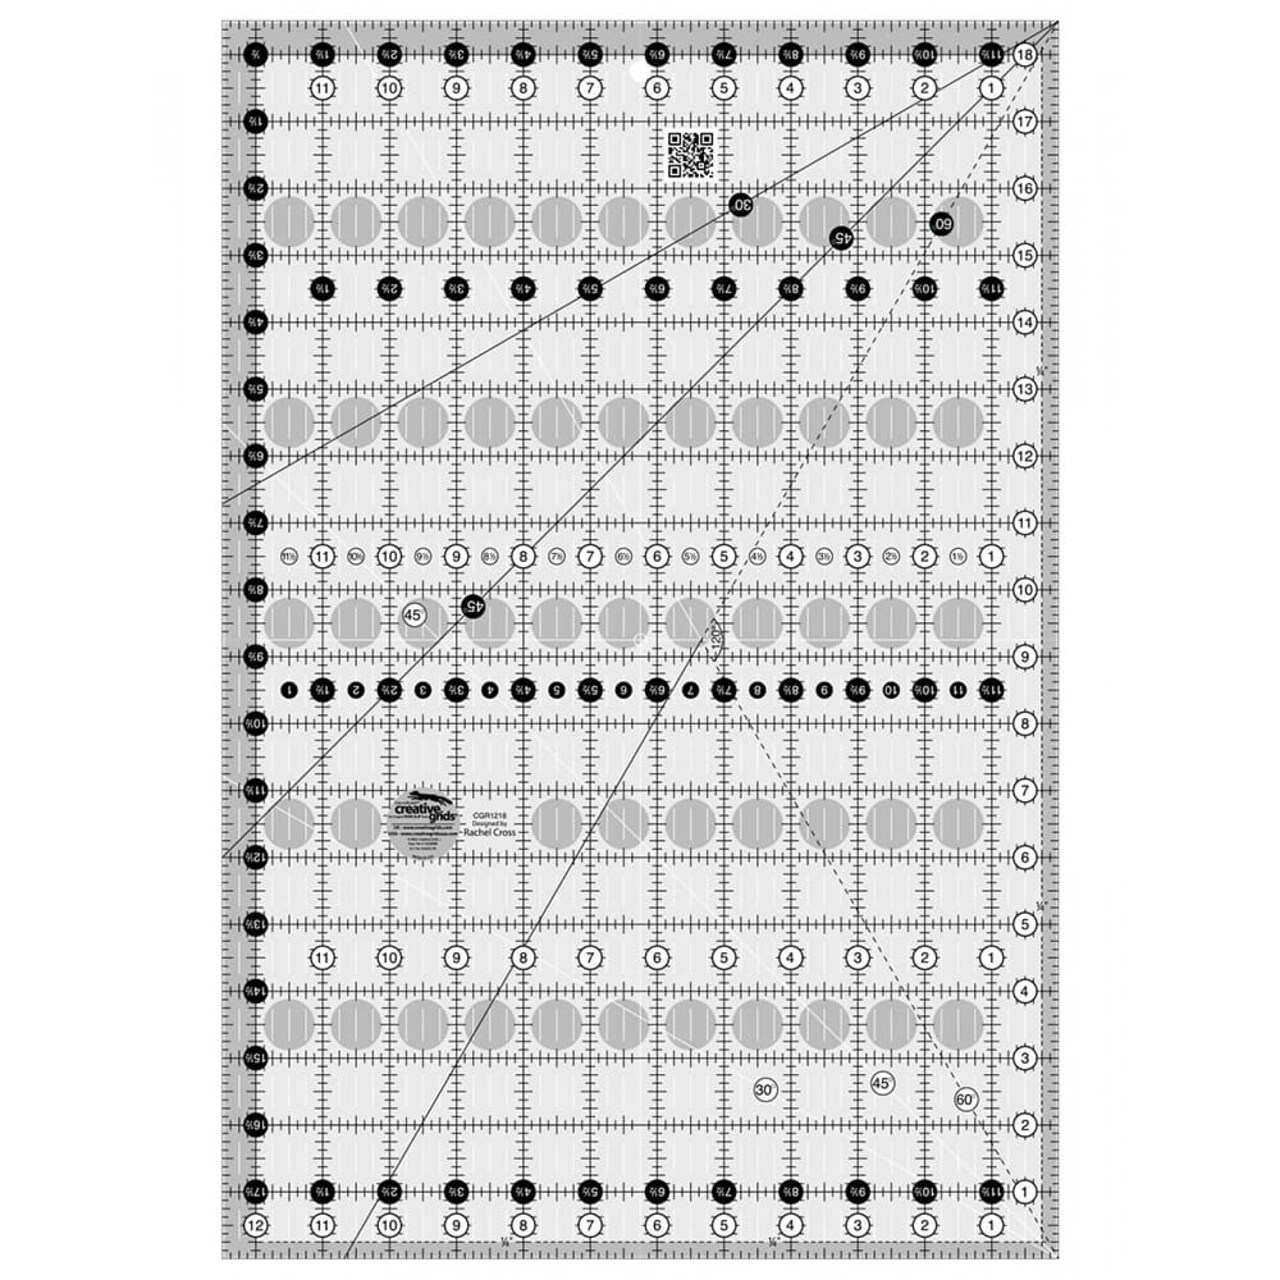 Creative Grids, Big Easy Junior Quilt Ruler 12-1/2 x 18-1/2